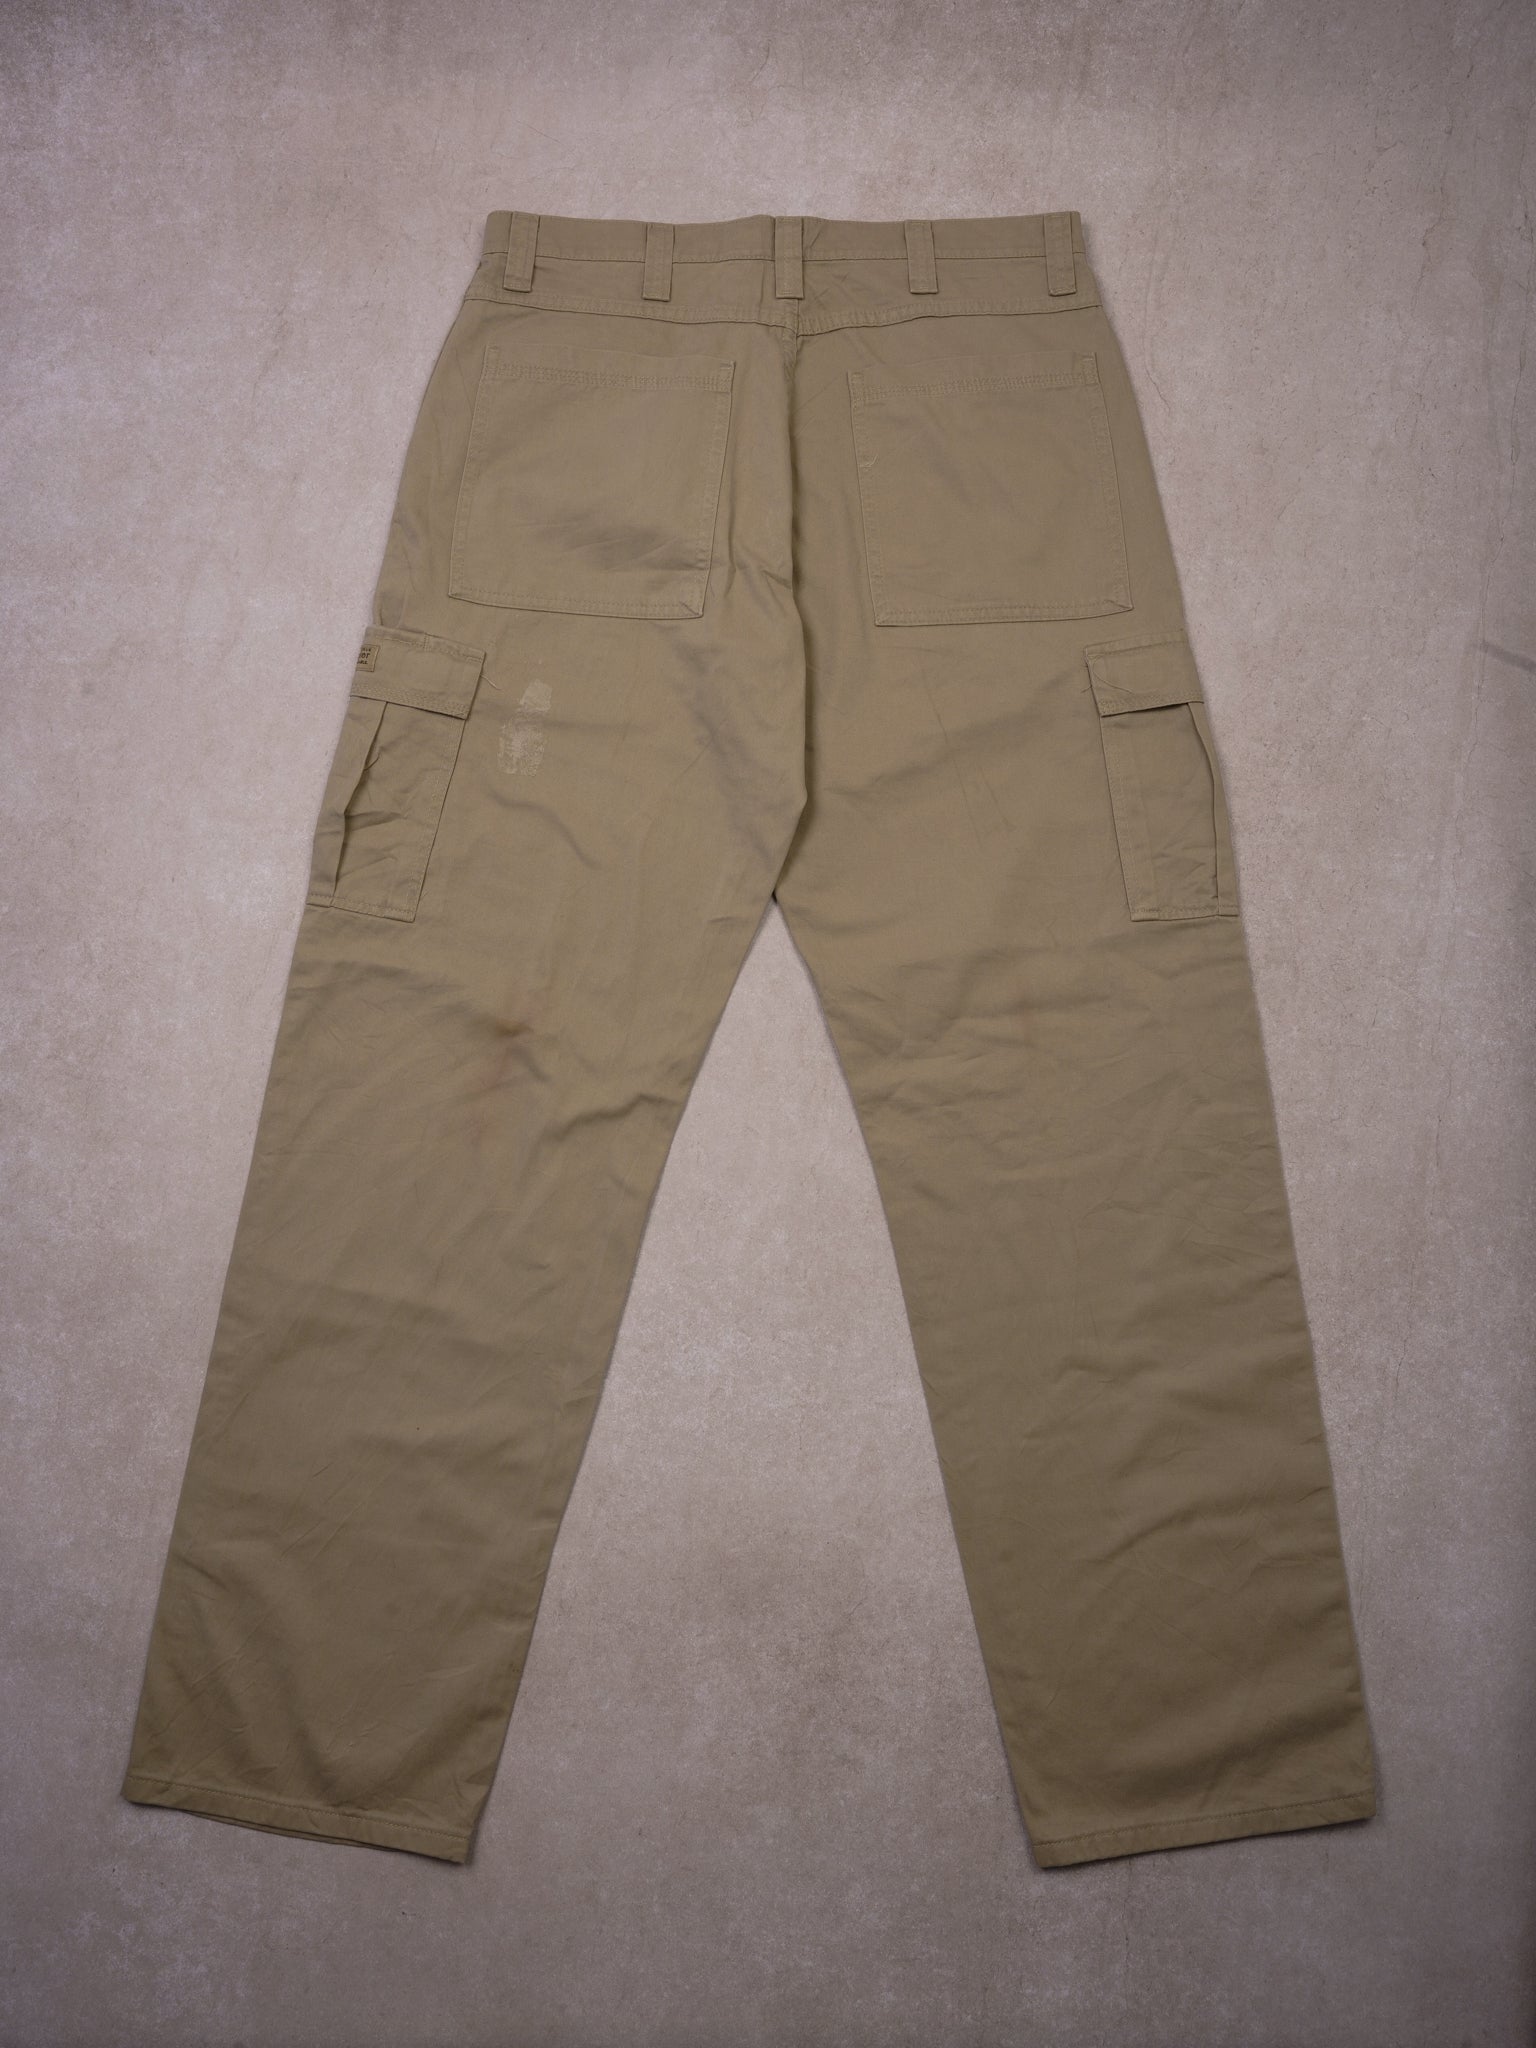 Vintage 90s Beige Wranglers Cargo Workwear Pants (36x35)